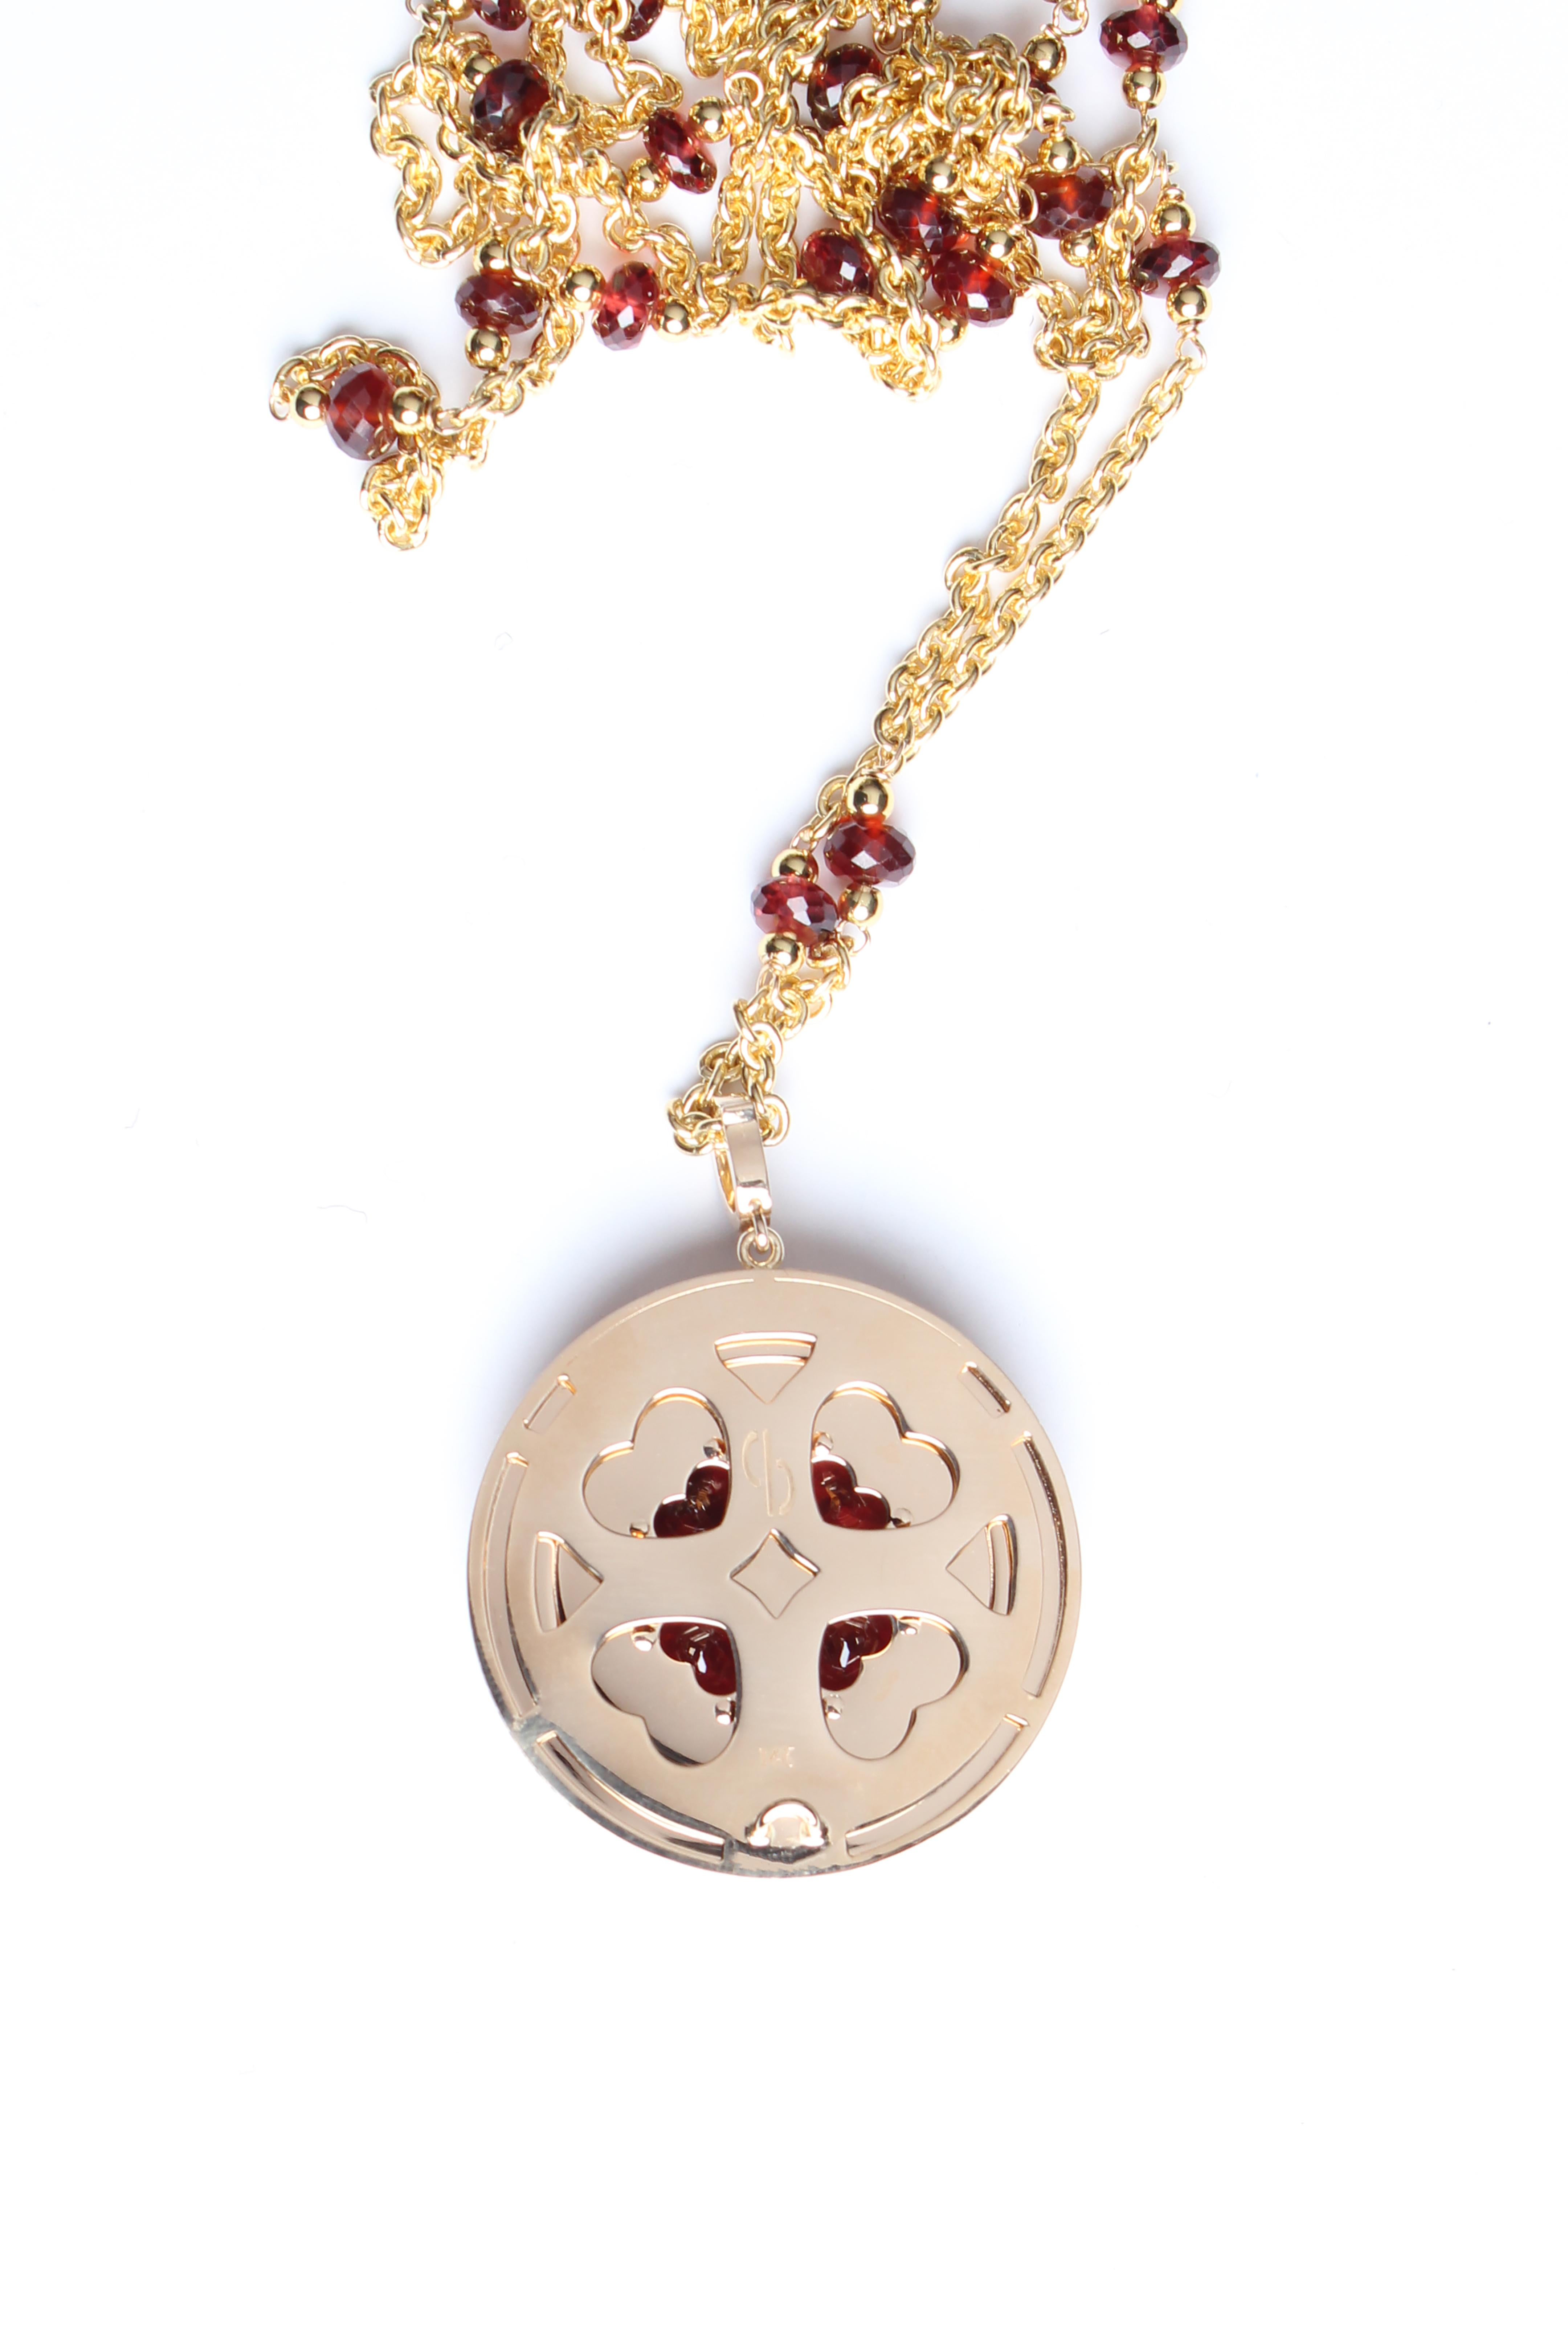 Clarissa Bronfman Garnet Clover Diamond 14k SolidGold Medallion Pendant Necklace For Sale 2